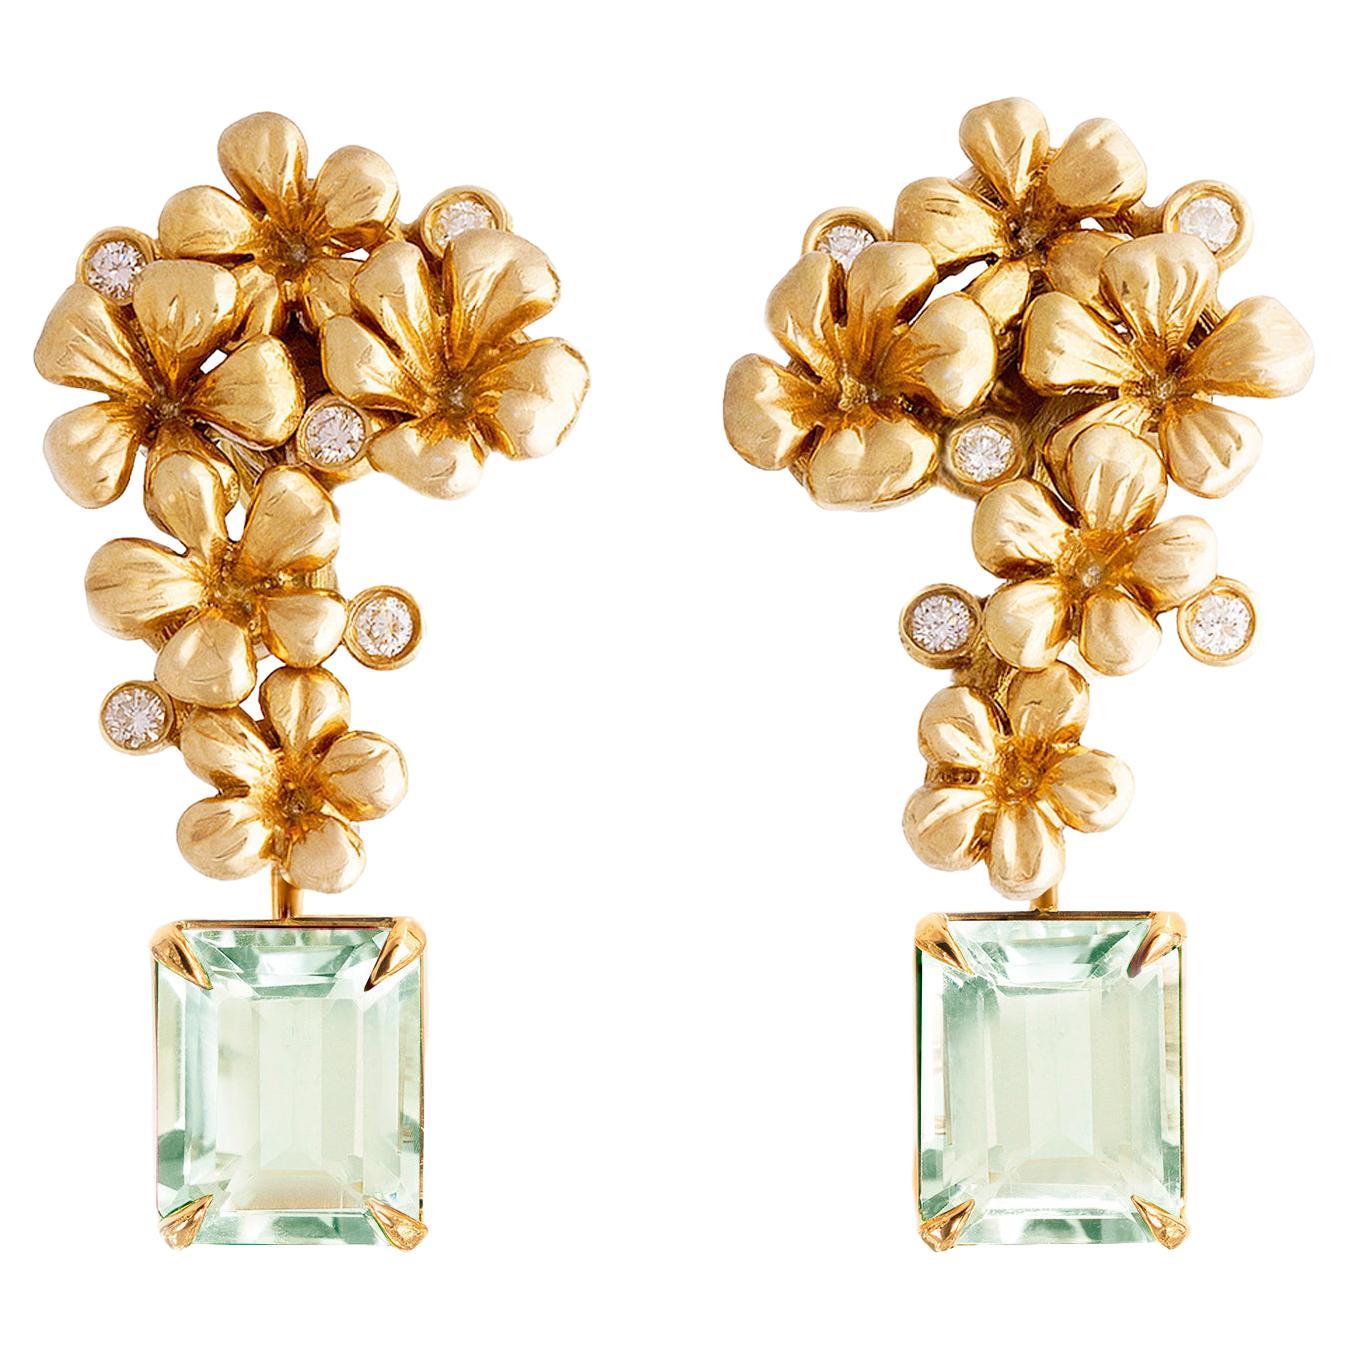 Modern Style Clip-on Earrings in Eighteen Karat Yellow Gold with Diamonds